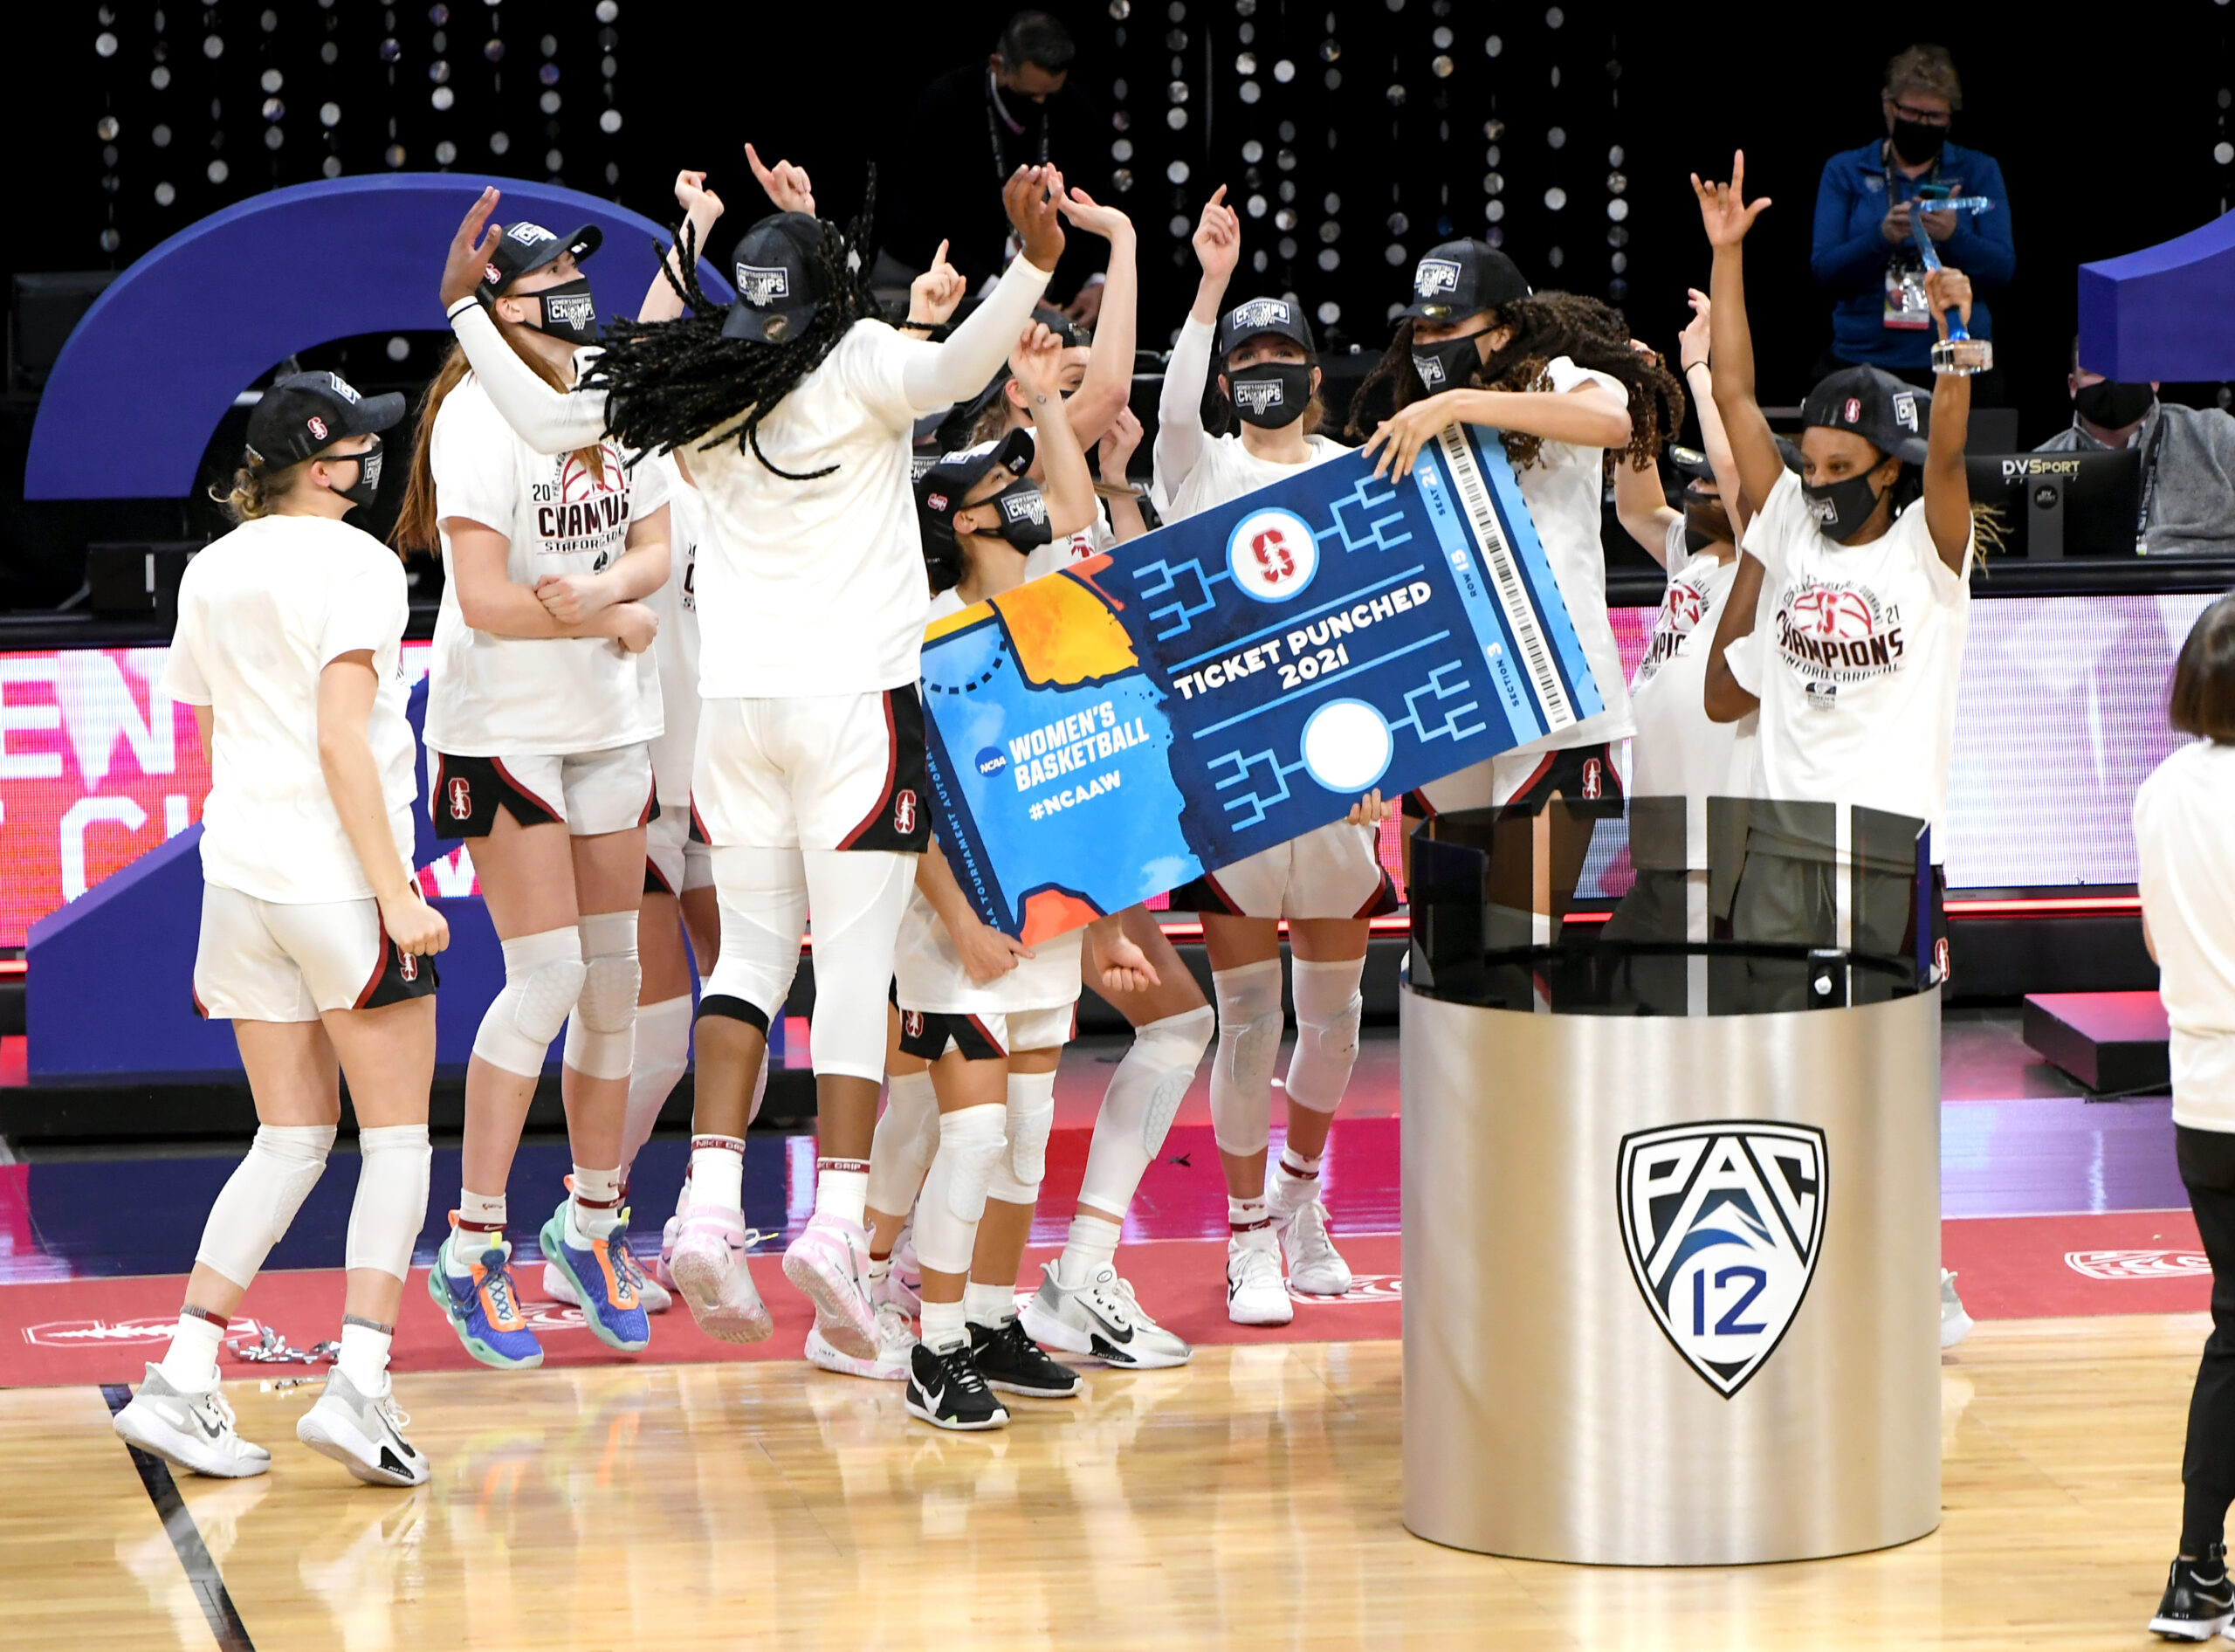 2021 NCAA DI women’s basketball conference tournament champions